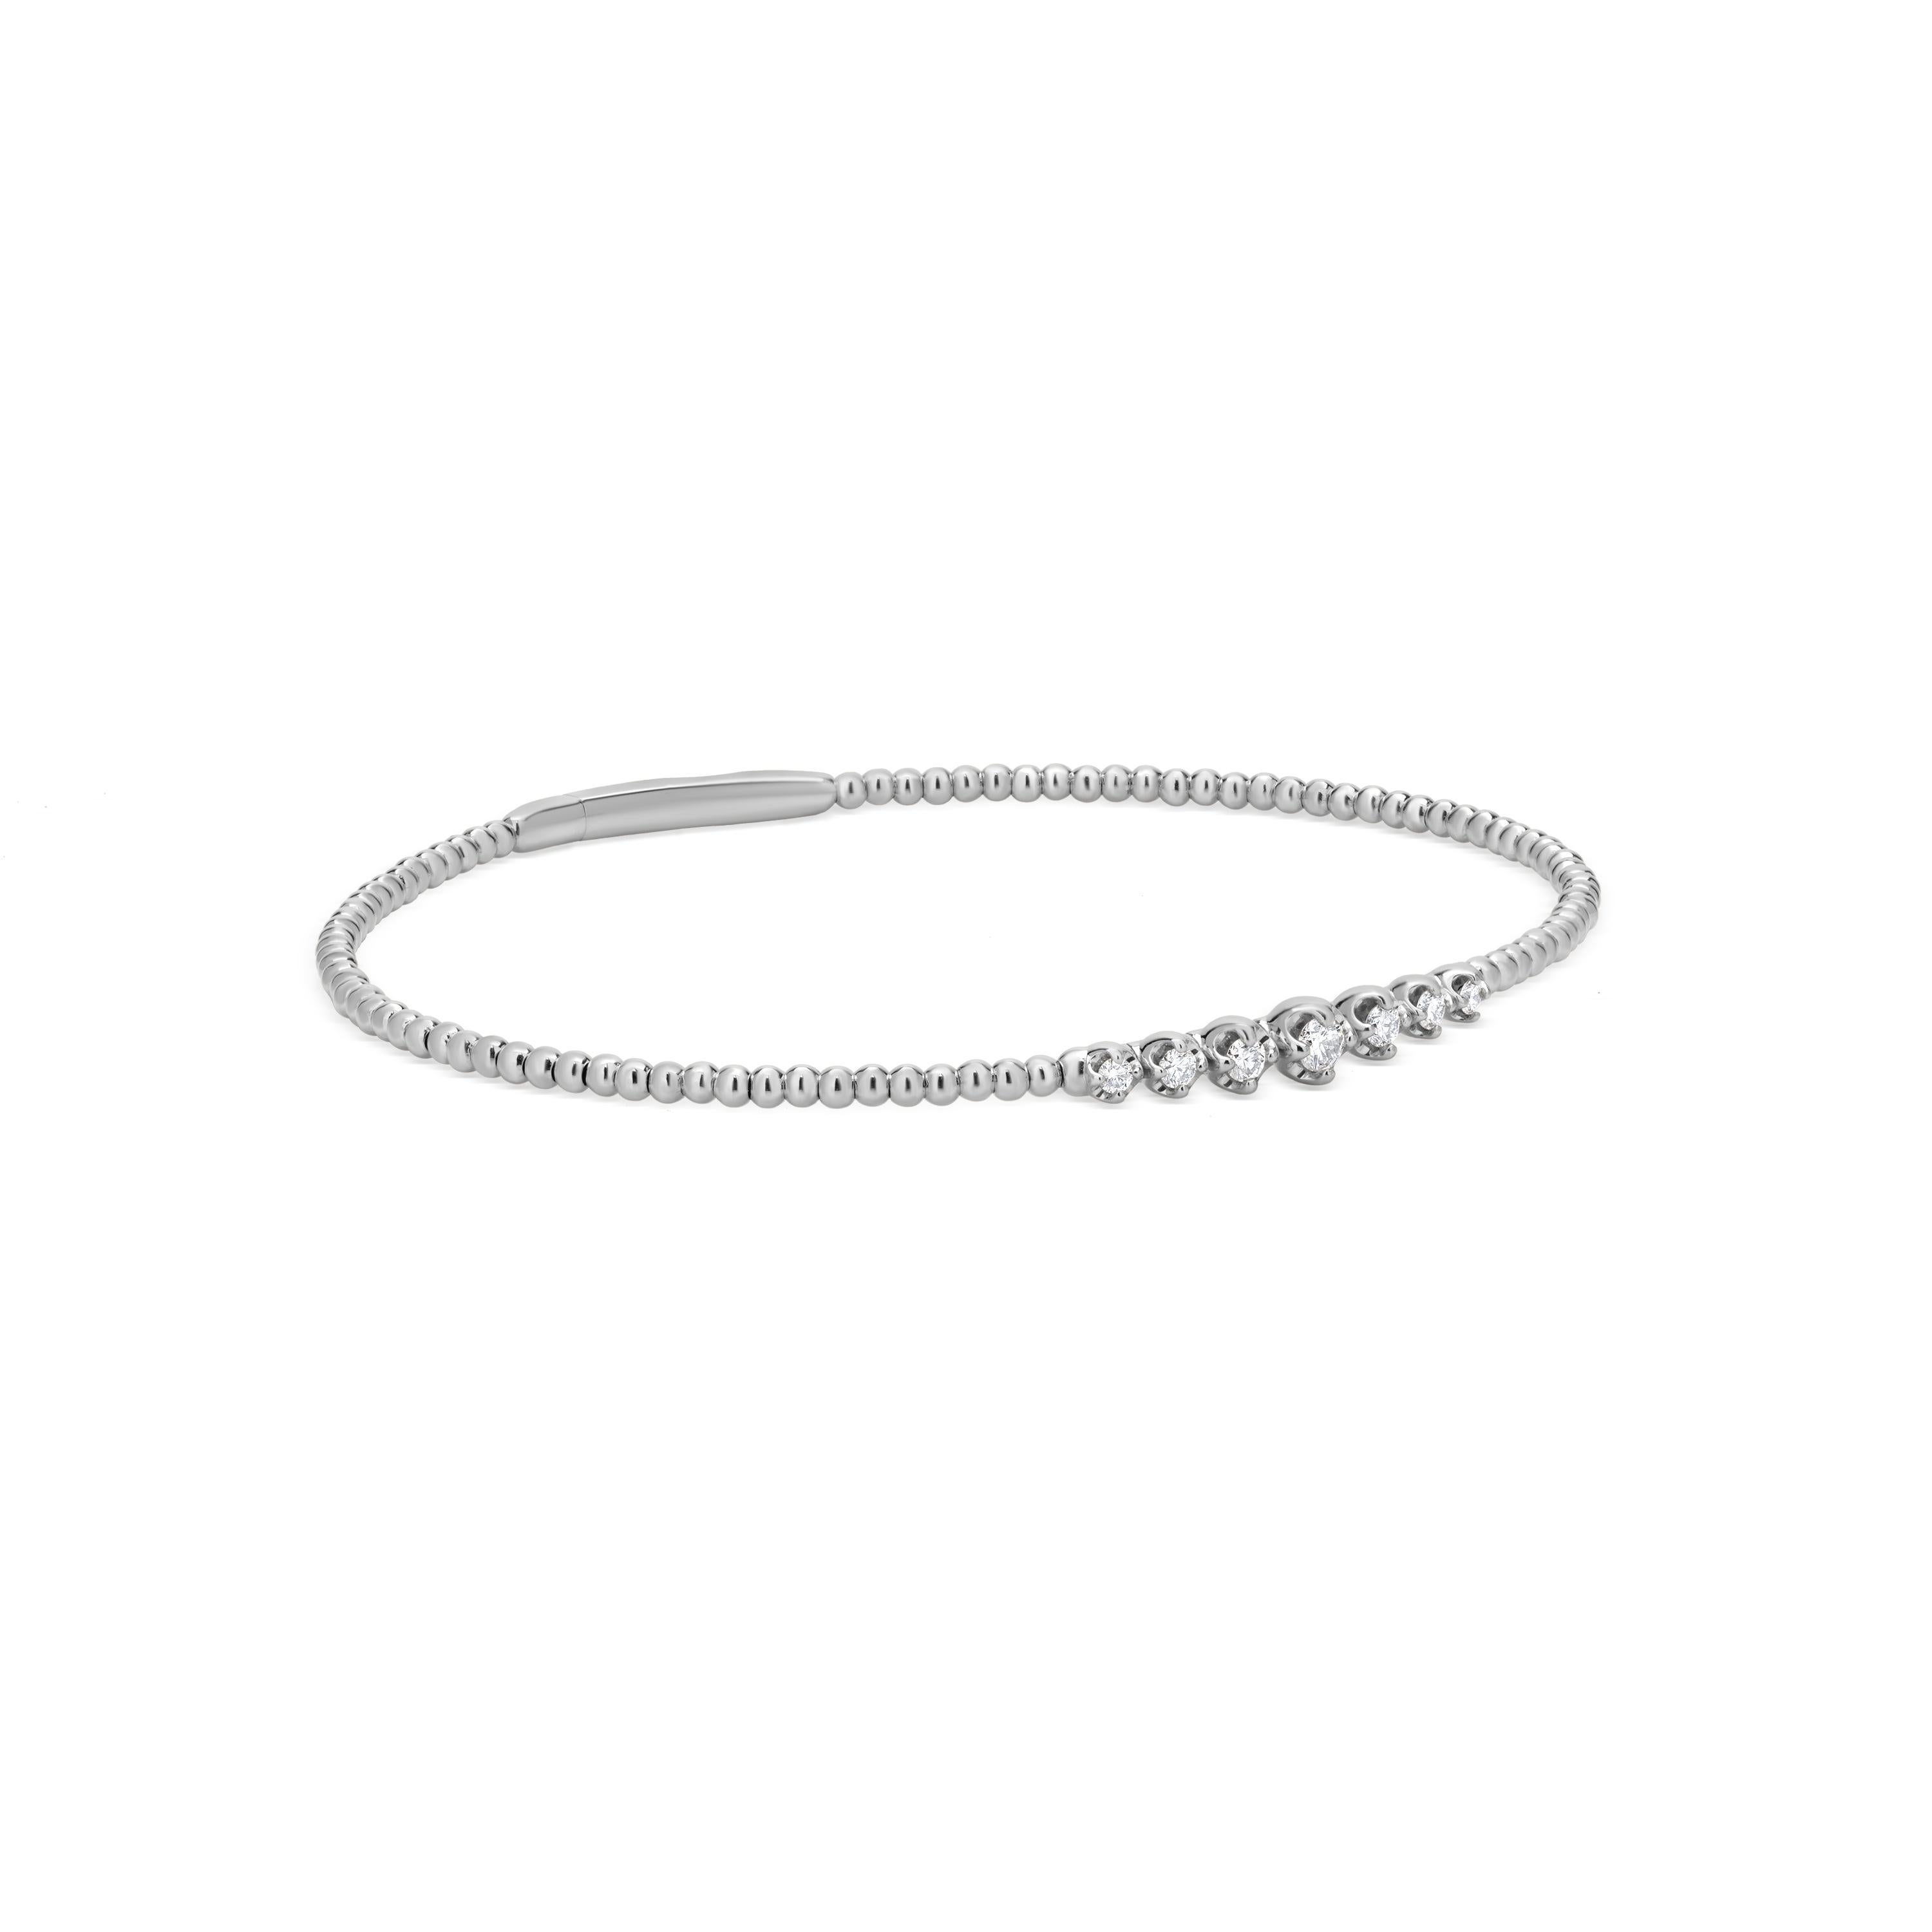 Contemporary Luxle 0.2cttw Diamond Graduated Bangle Bracelet in 18k White Gold For Sale